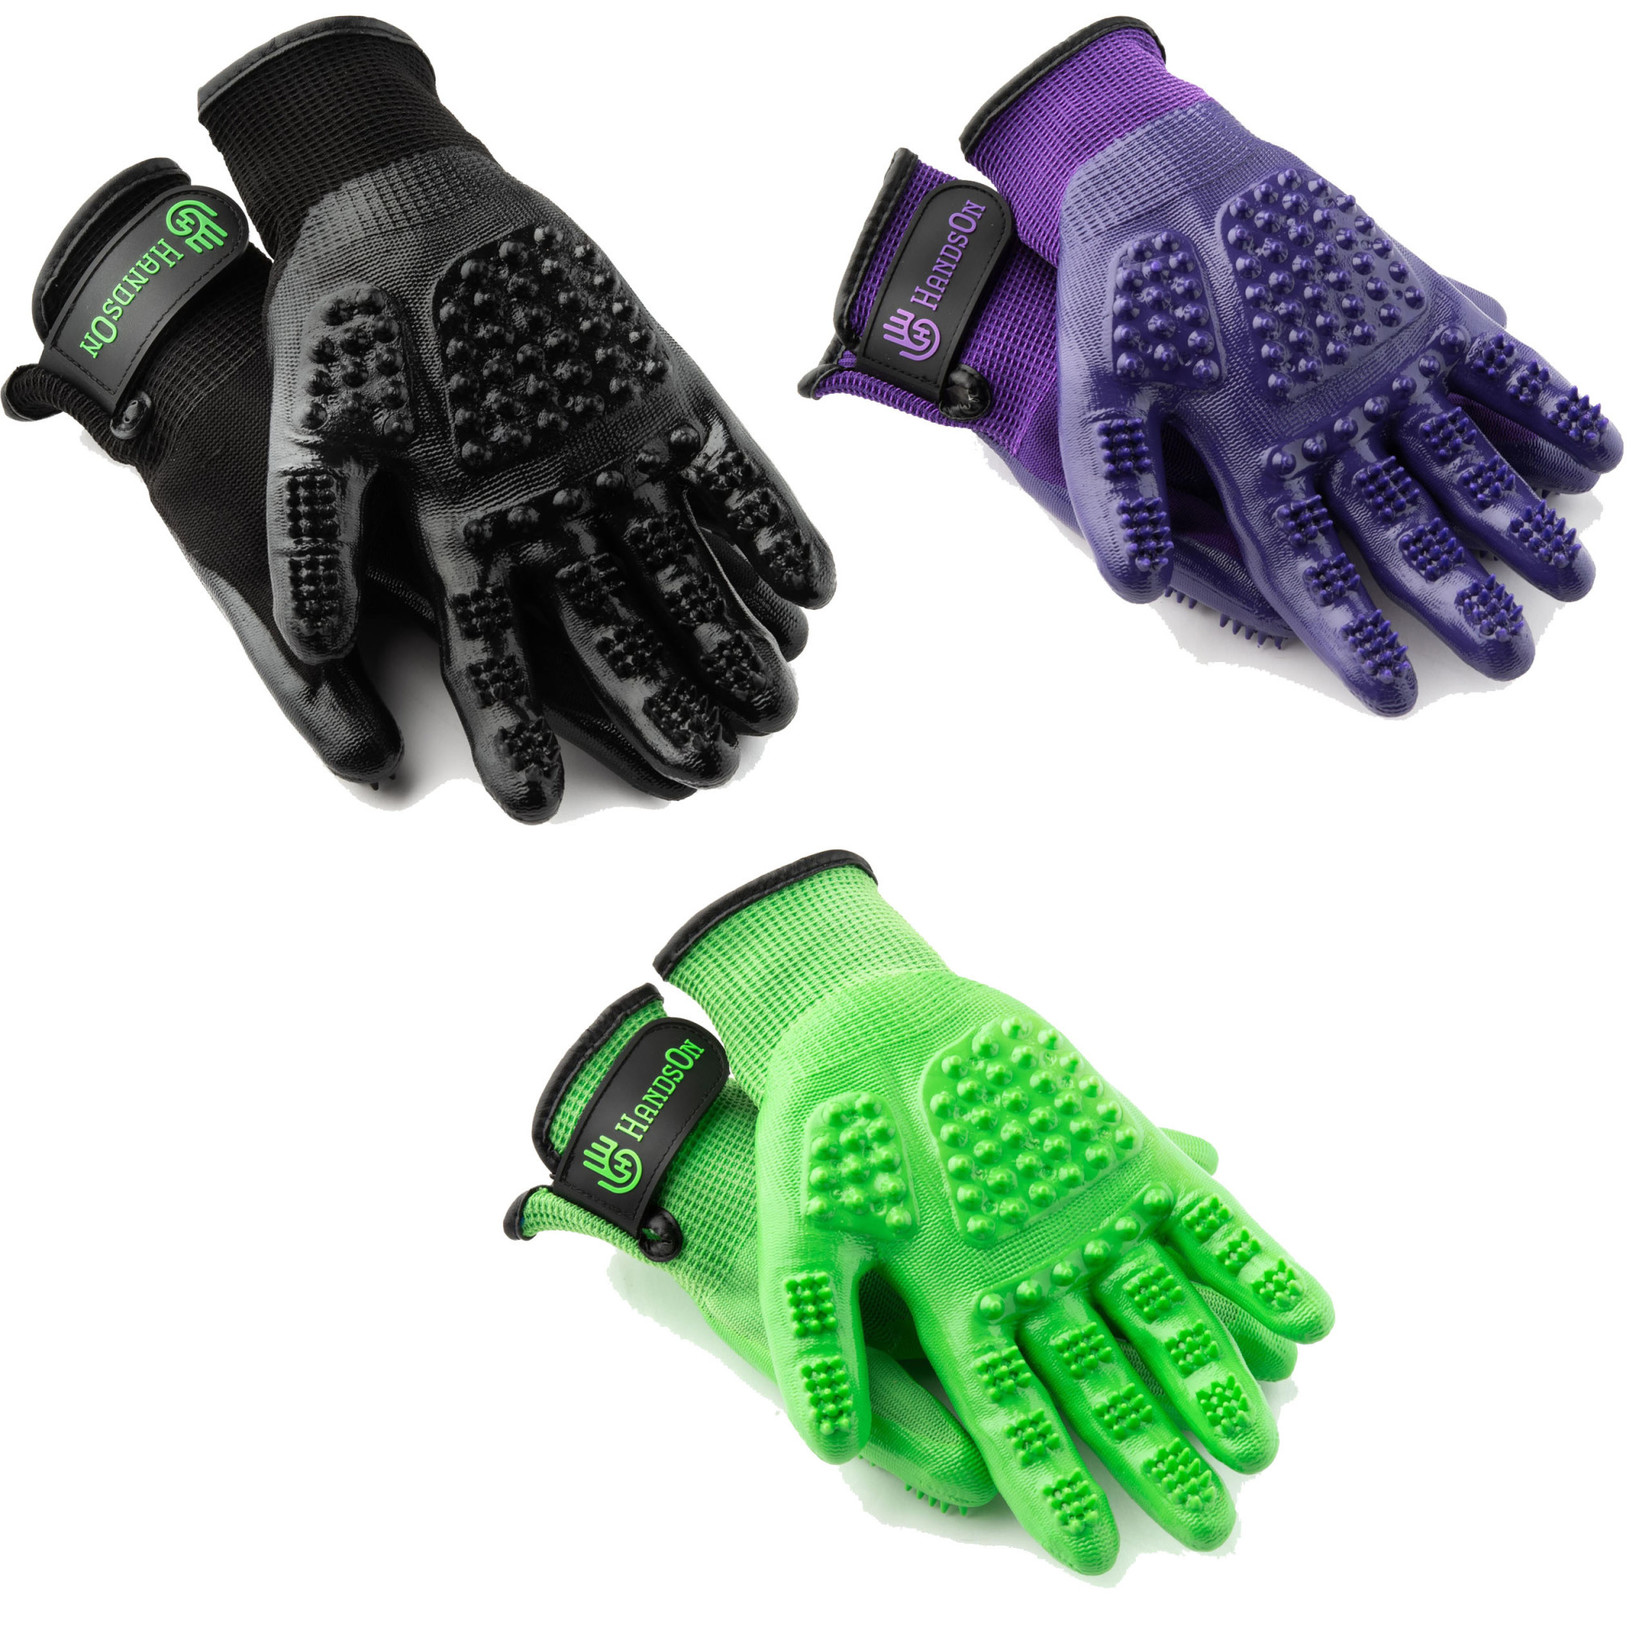 Hands On HandsOn Grooming Glove. Black XL